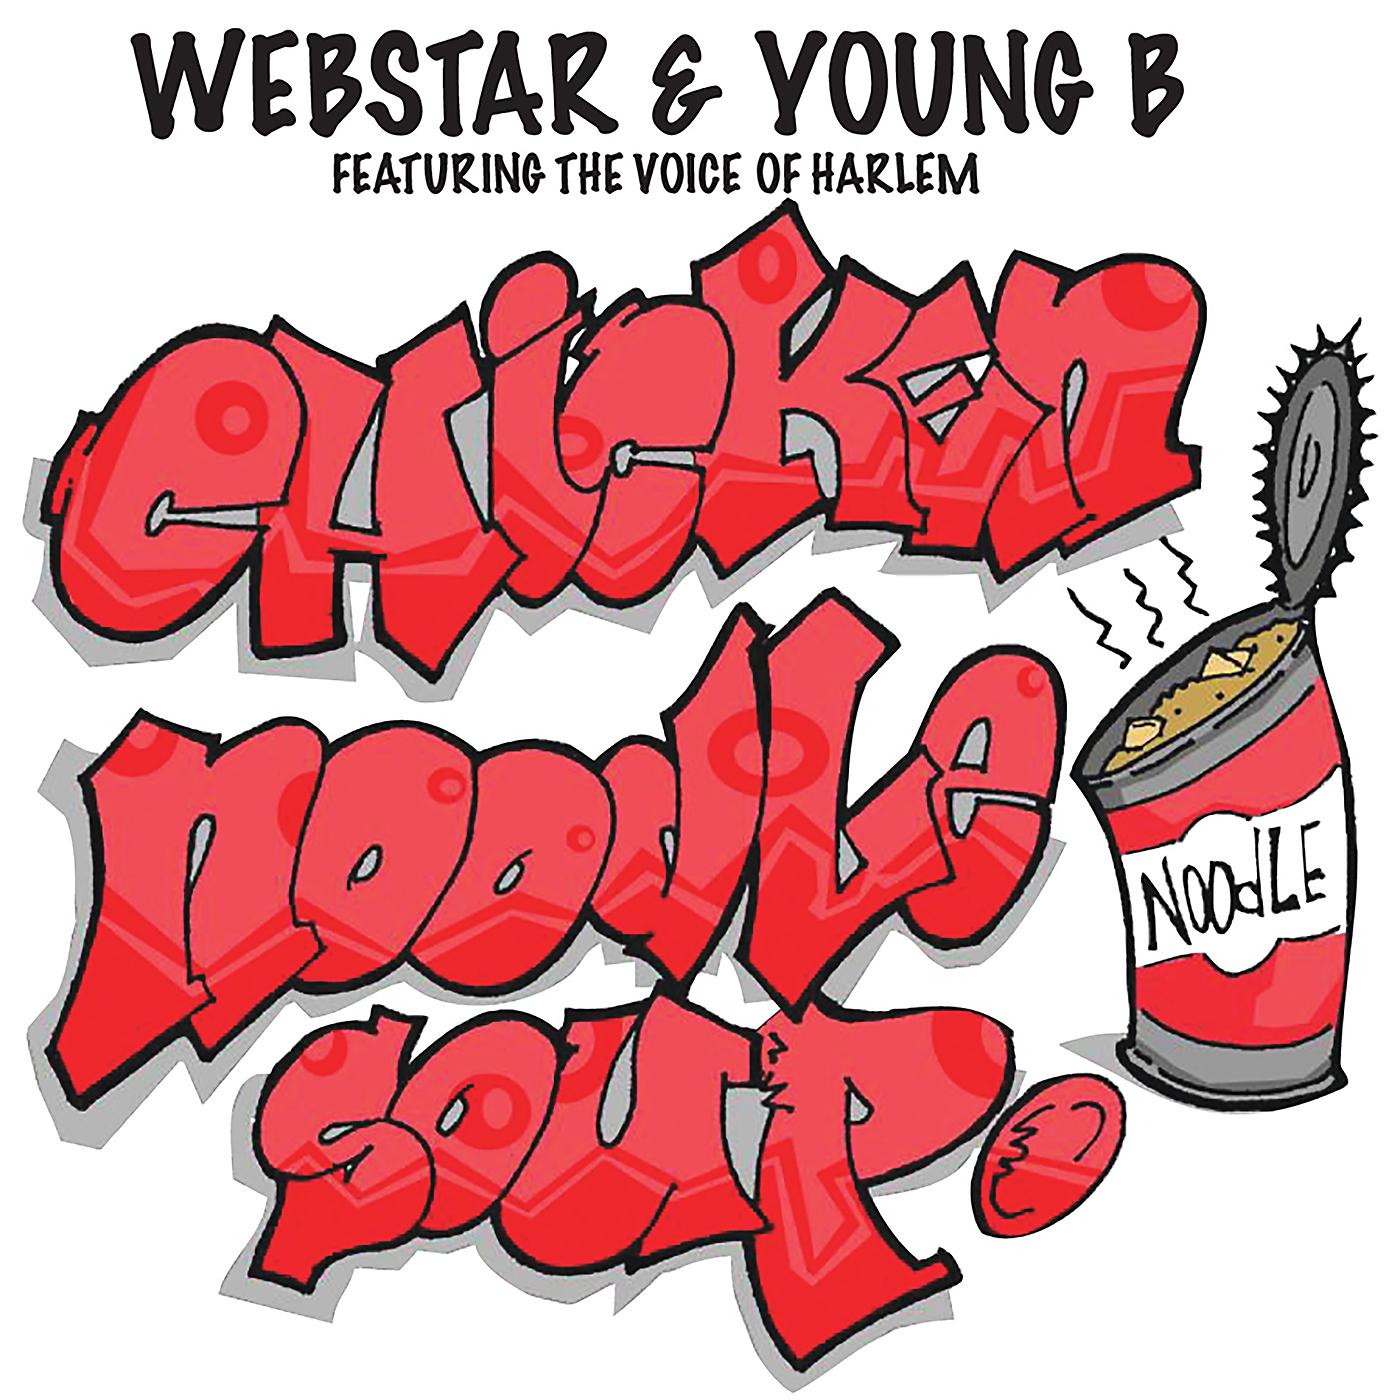 Постер альбома Chicken Noodle Soup